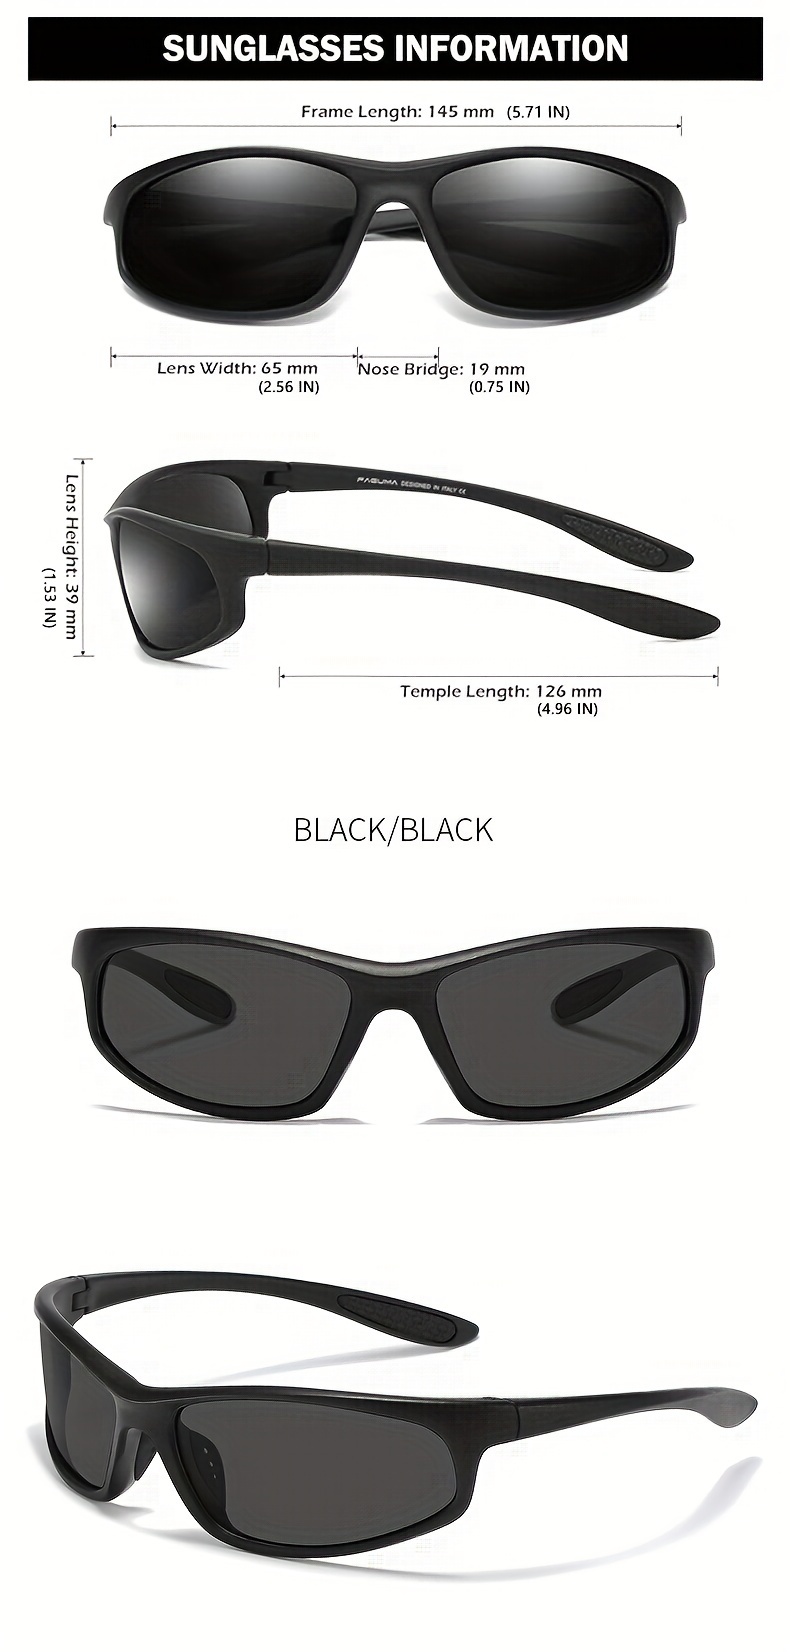 3pcs Polarized Sports Sunglasses For Men & Women, Windproof Sunglasses For Cycling, Baseball, Running, Fishing, Golf & Driving